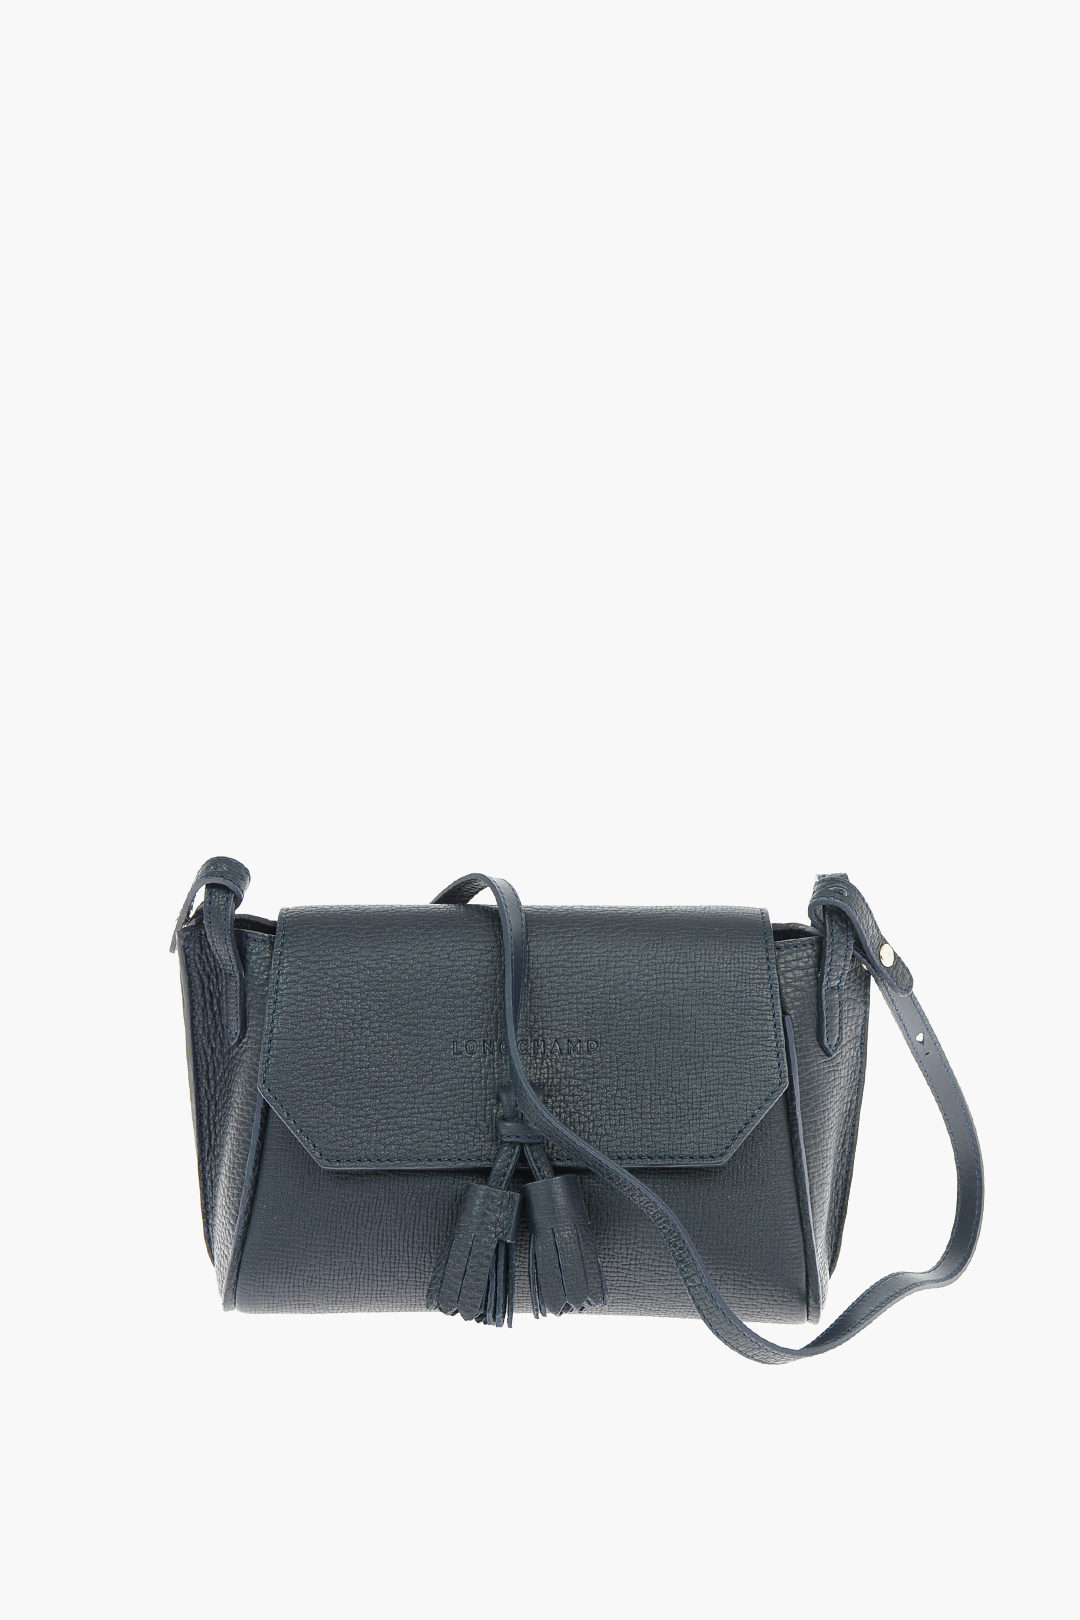 Longchamp Crossbody Bags for Women